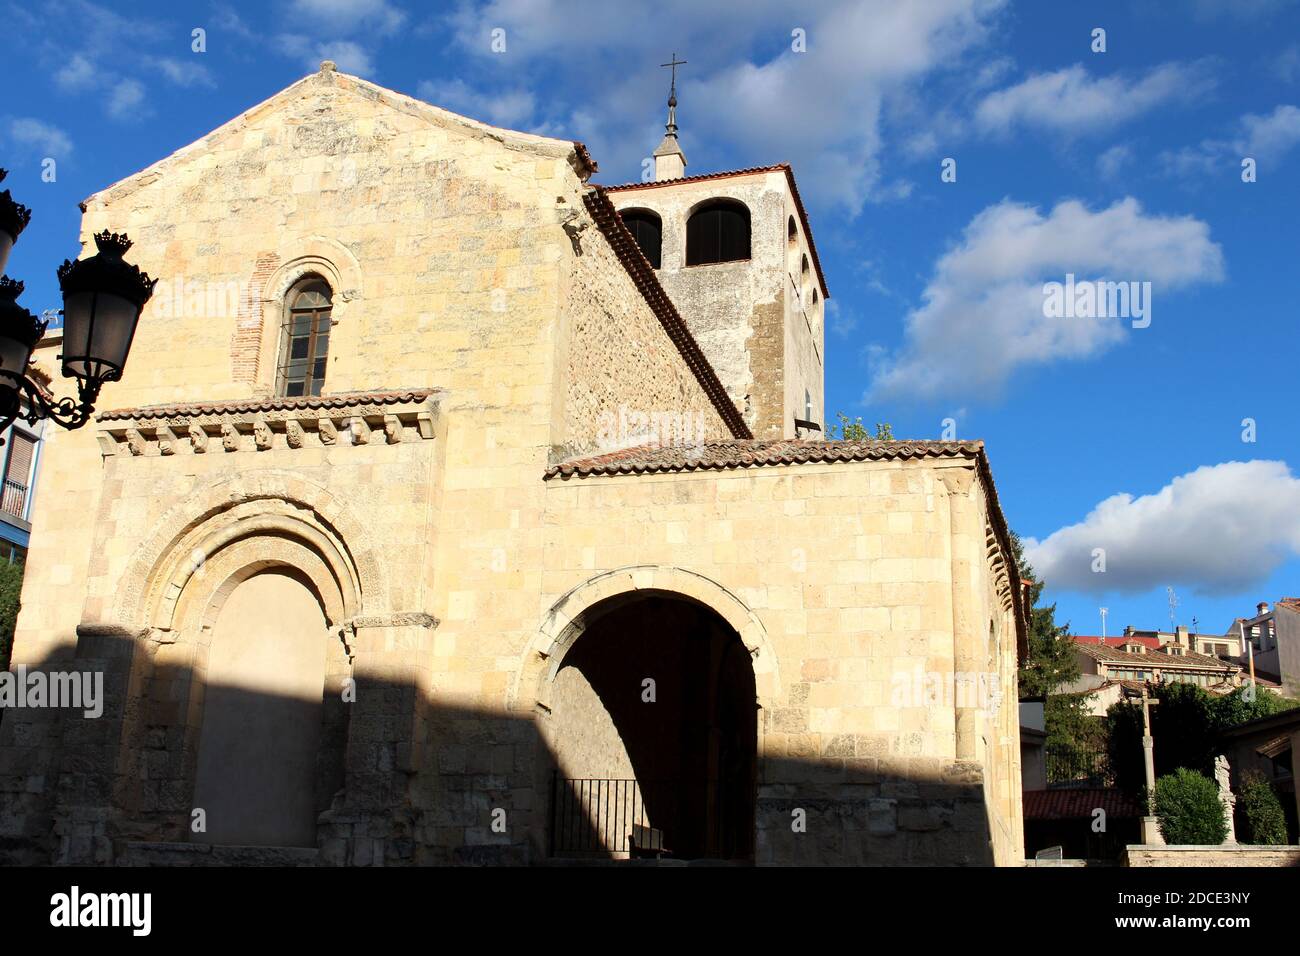 View of a catholic church in Segovia, Spain Stock Photo